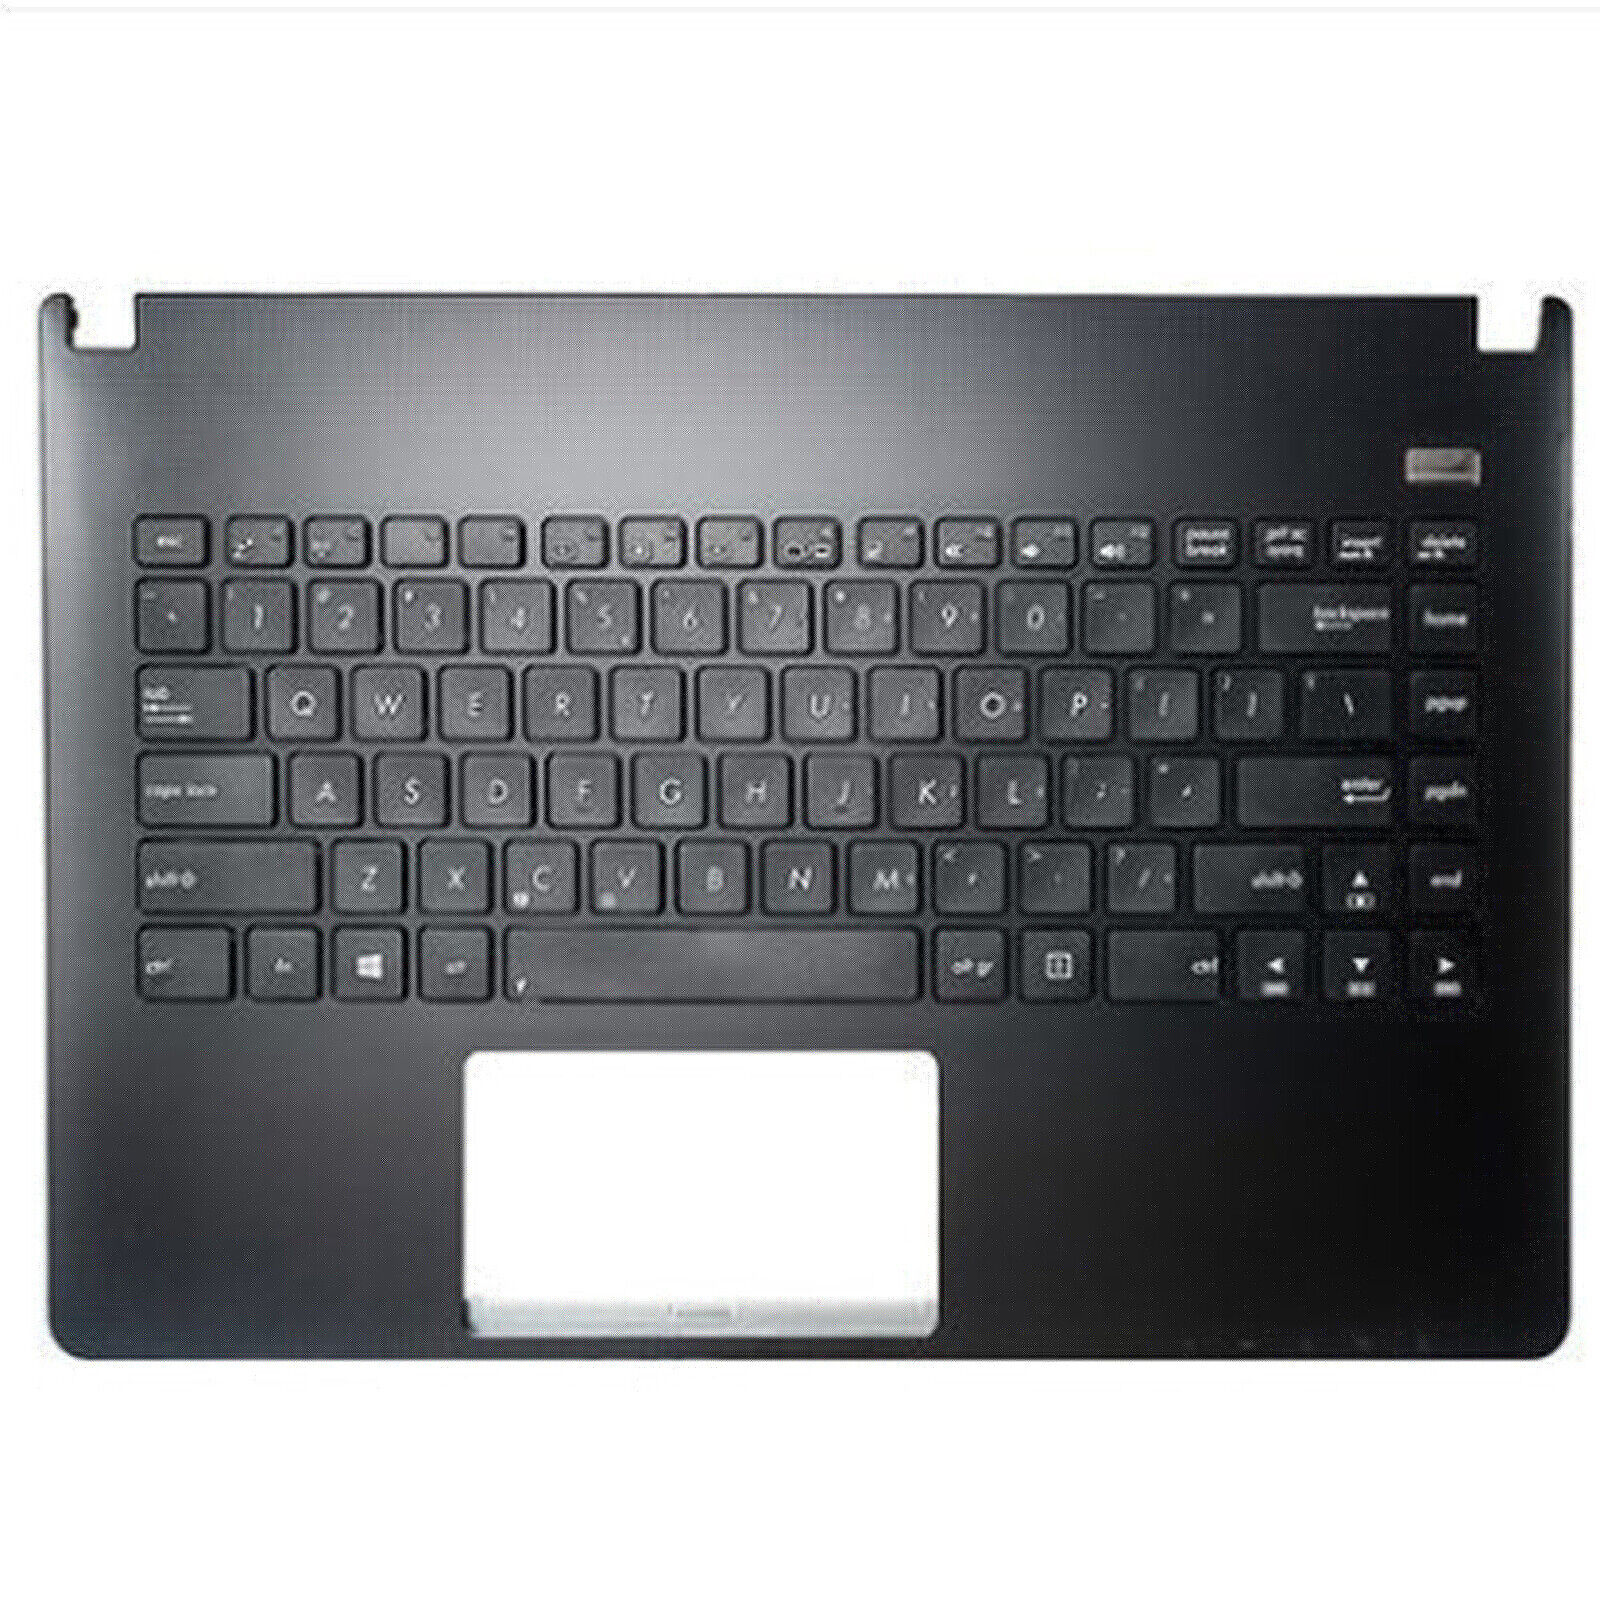 Upper Palmrest Cover+US Keyboard for Asus X401 X401A X401U X401EB X401E1 Laptop